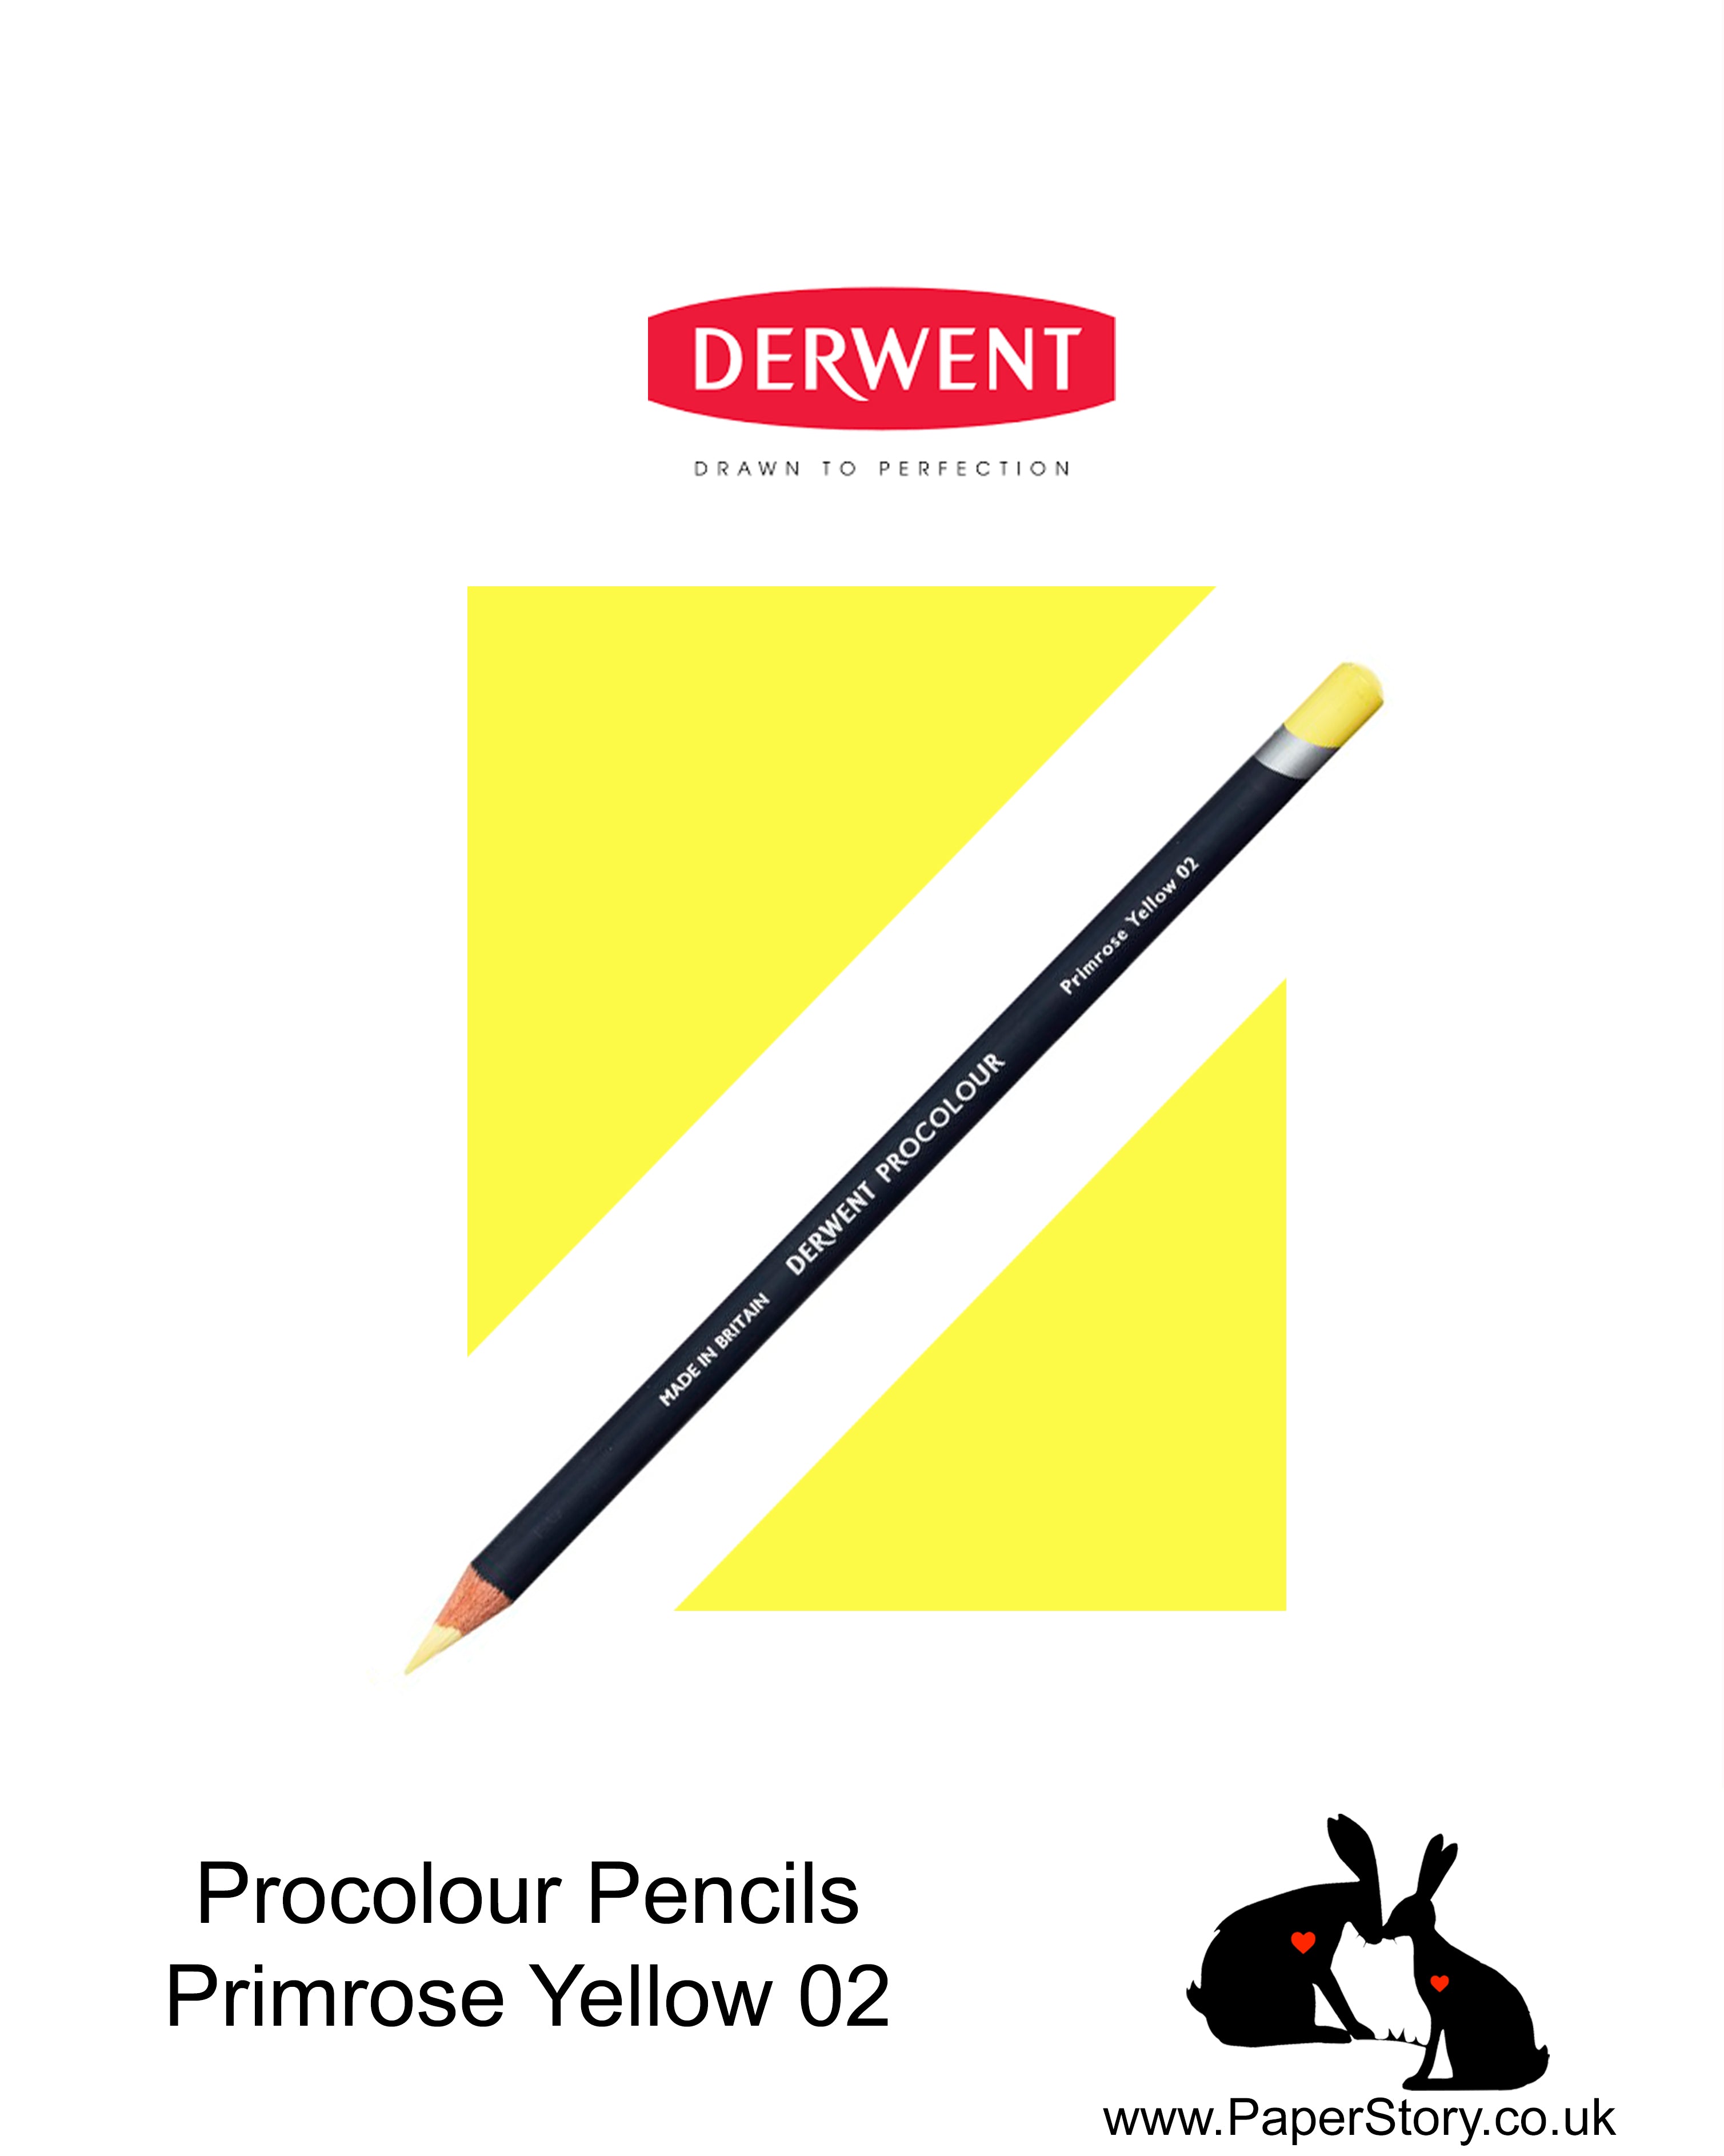 Derwent Procolour pencil Primrose Yellow 02